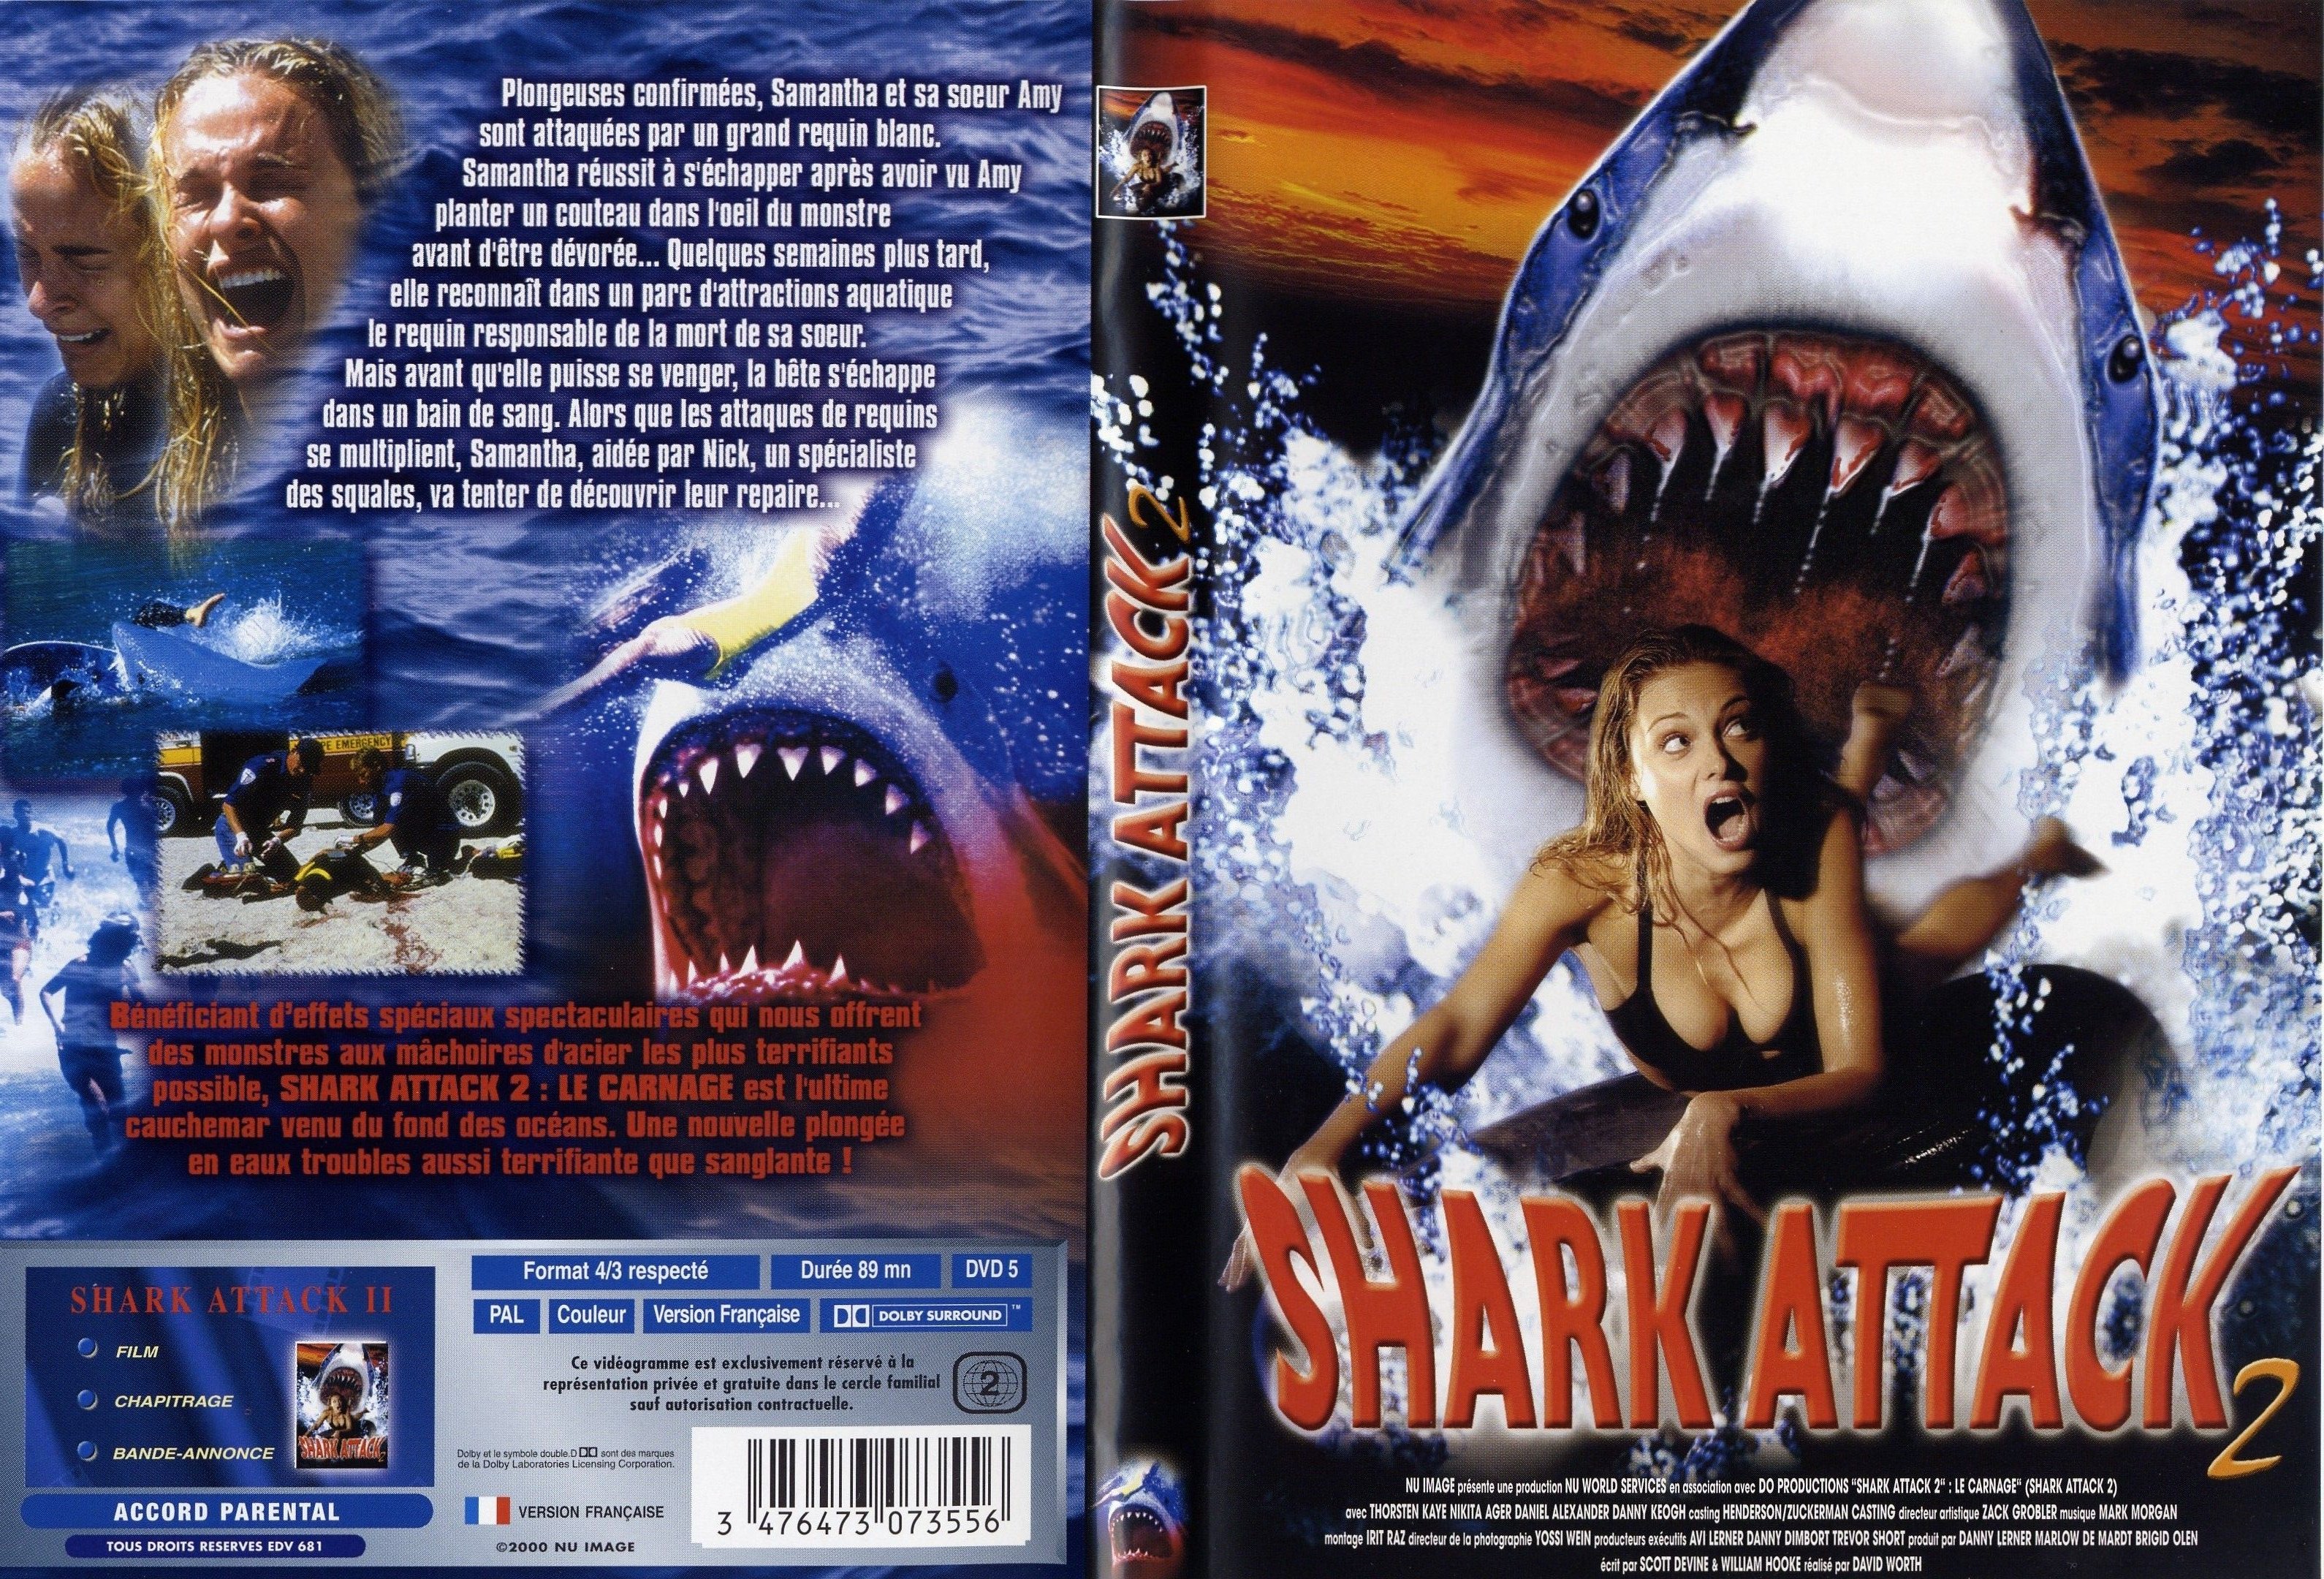 Jaquette DVD Shark attack 2